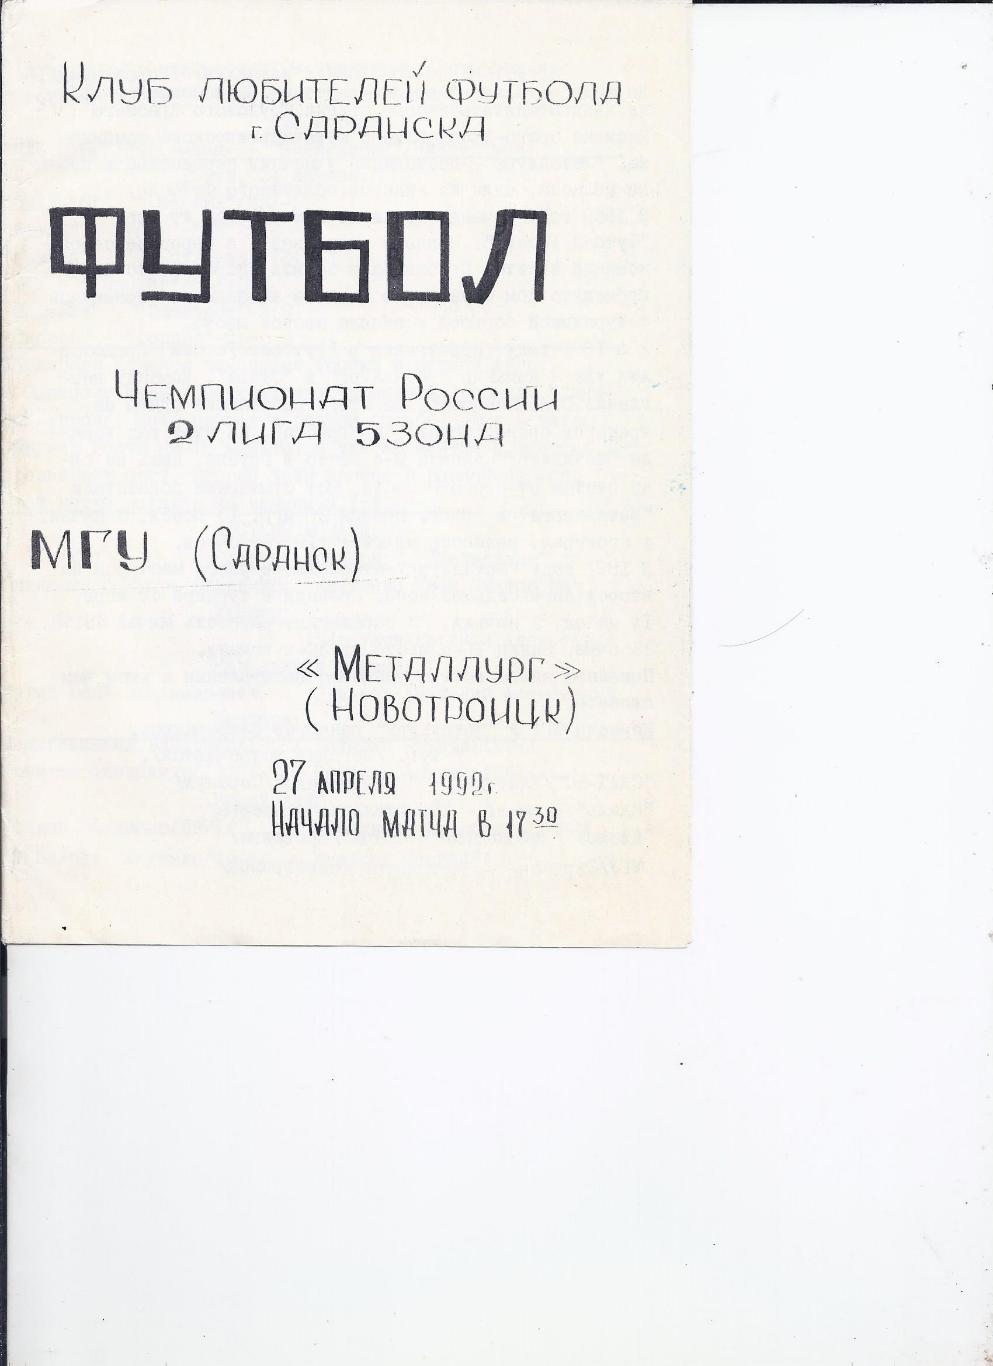 27.04.1992 МГУ(Саранск) - Металлург(Новотроицк) КЛФ